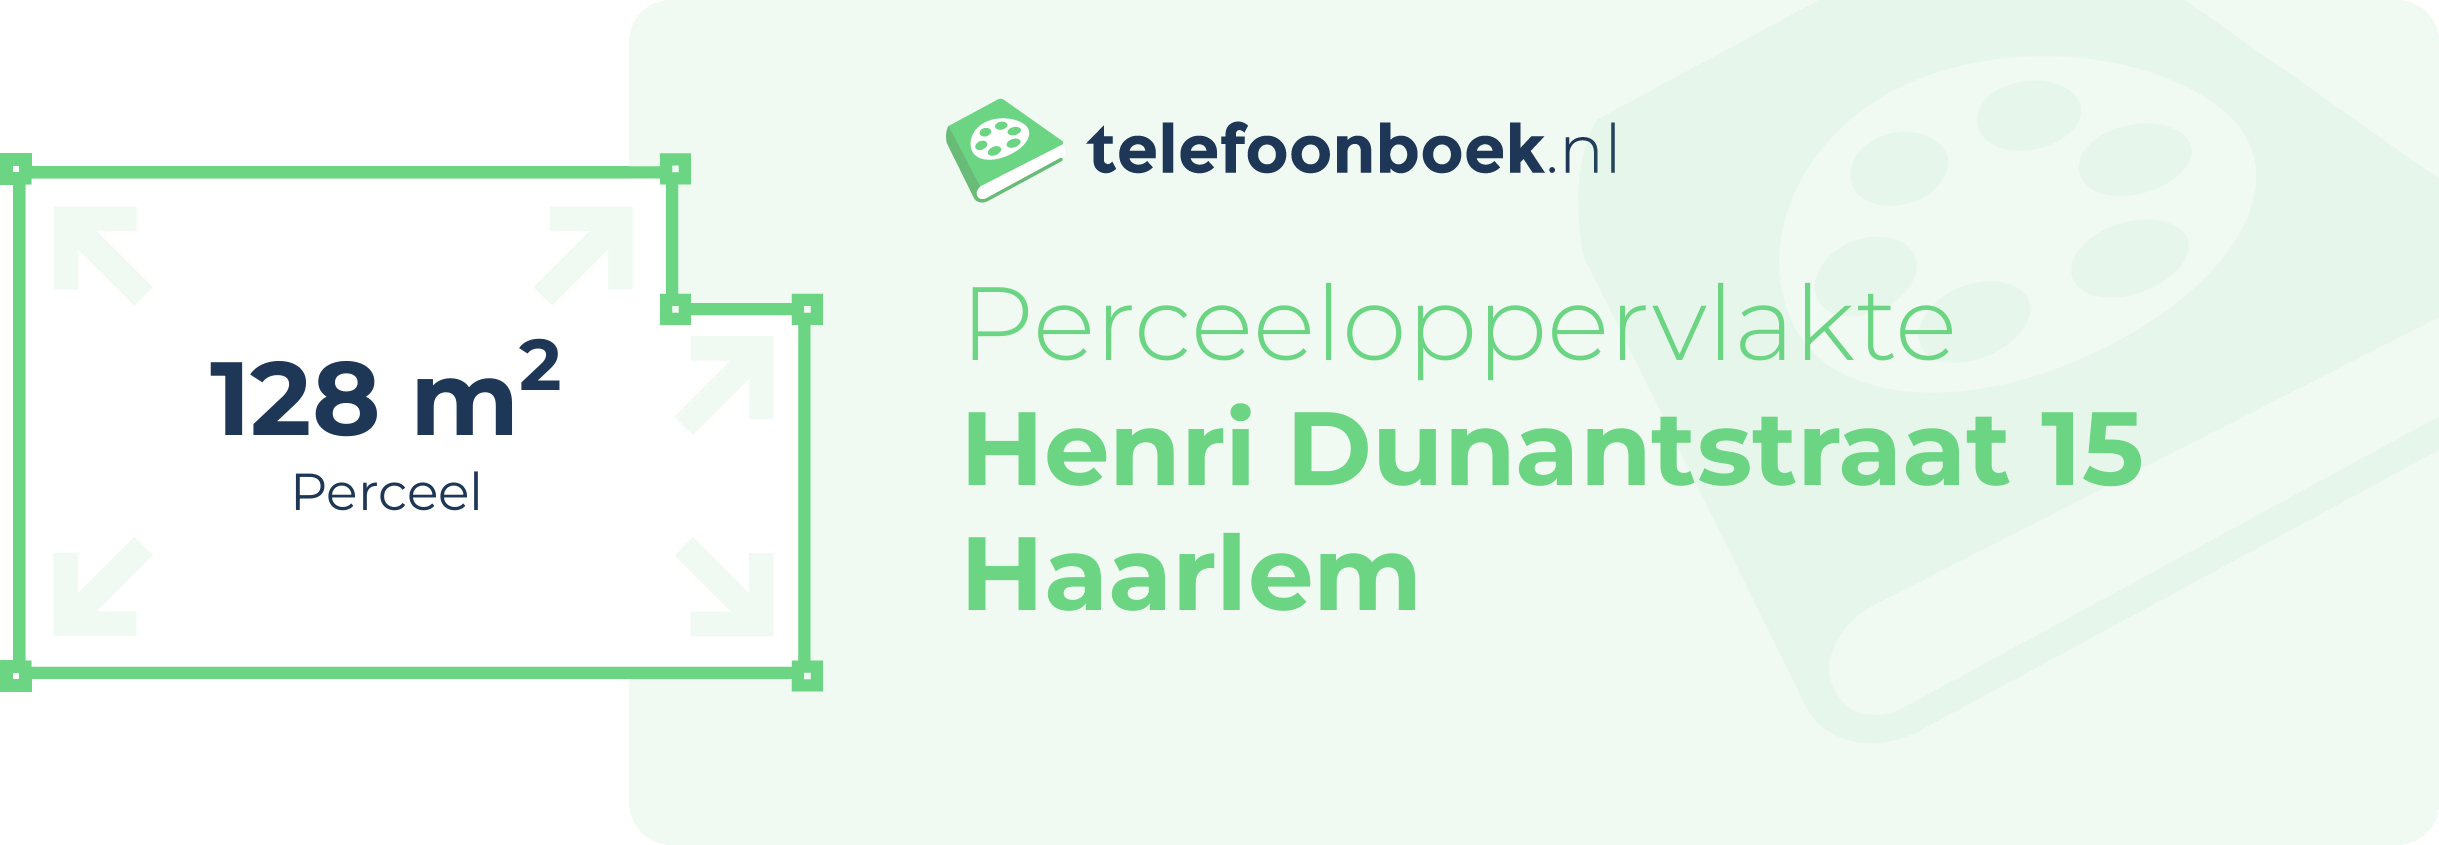 Perceeloppervlakte Henri Dunantstraat 15 Haarlem